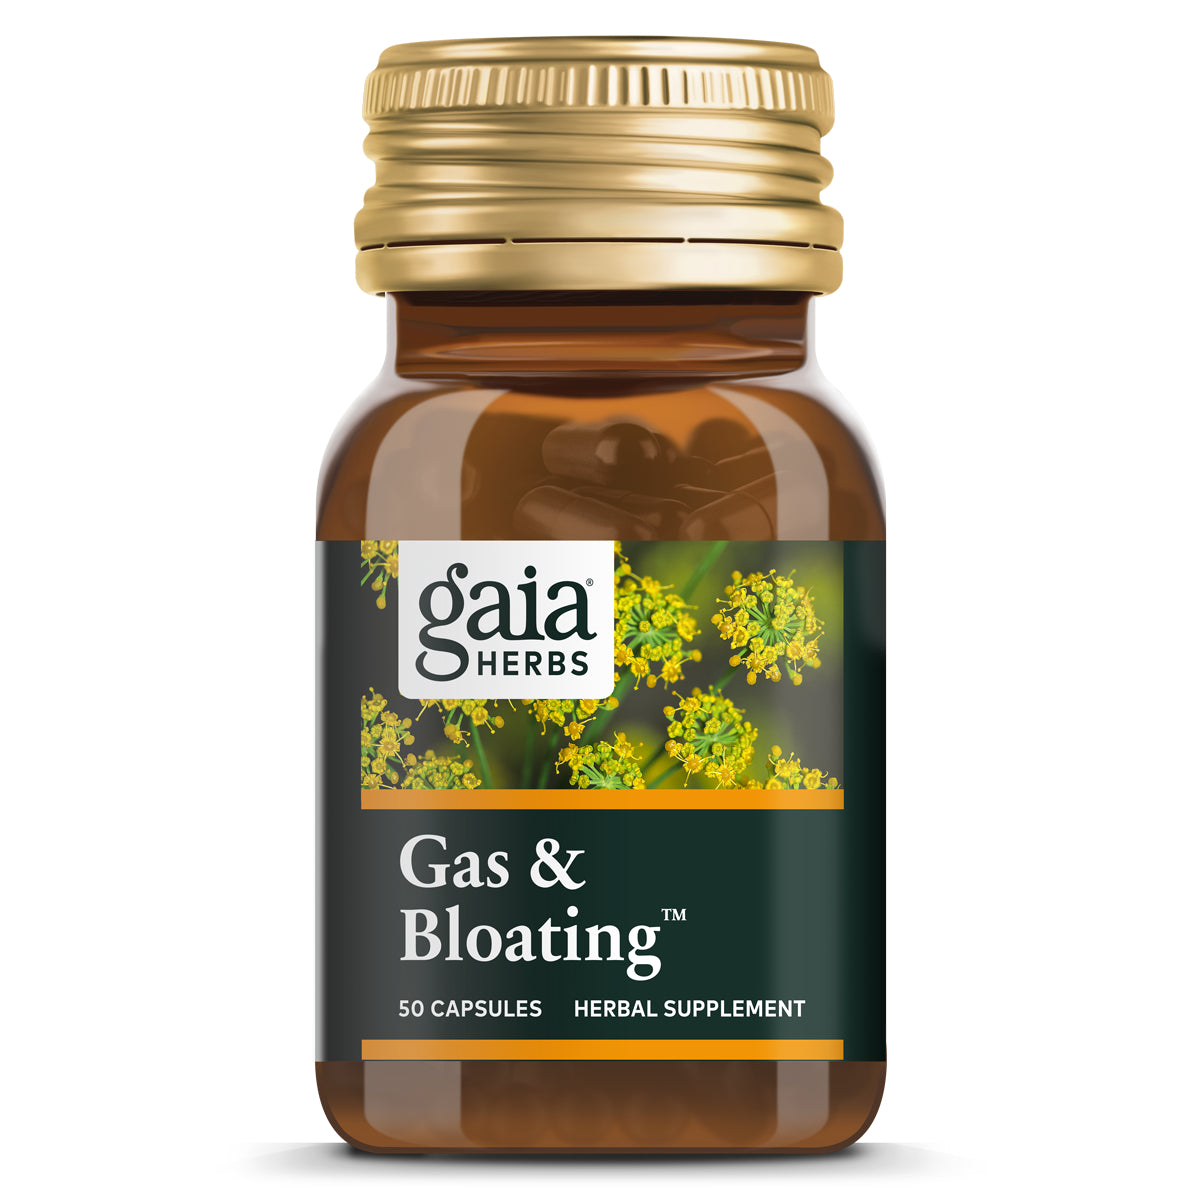 Gas & Bloating - Gaia Herbs